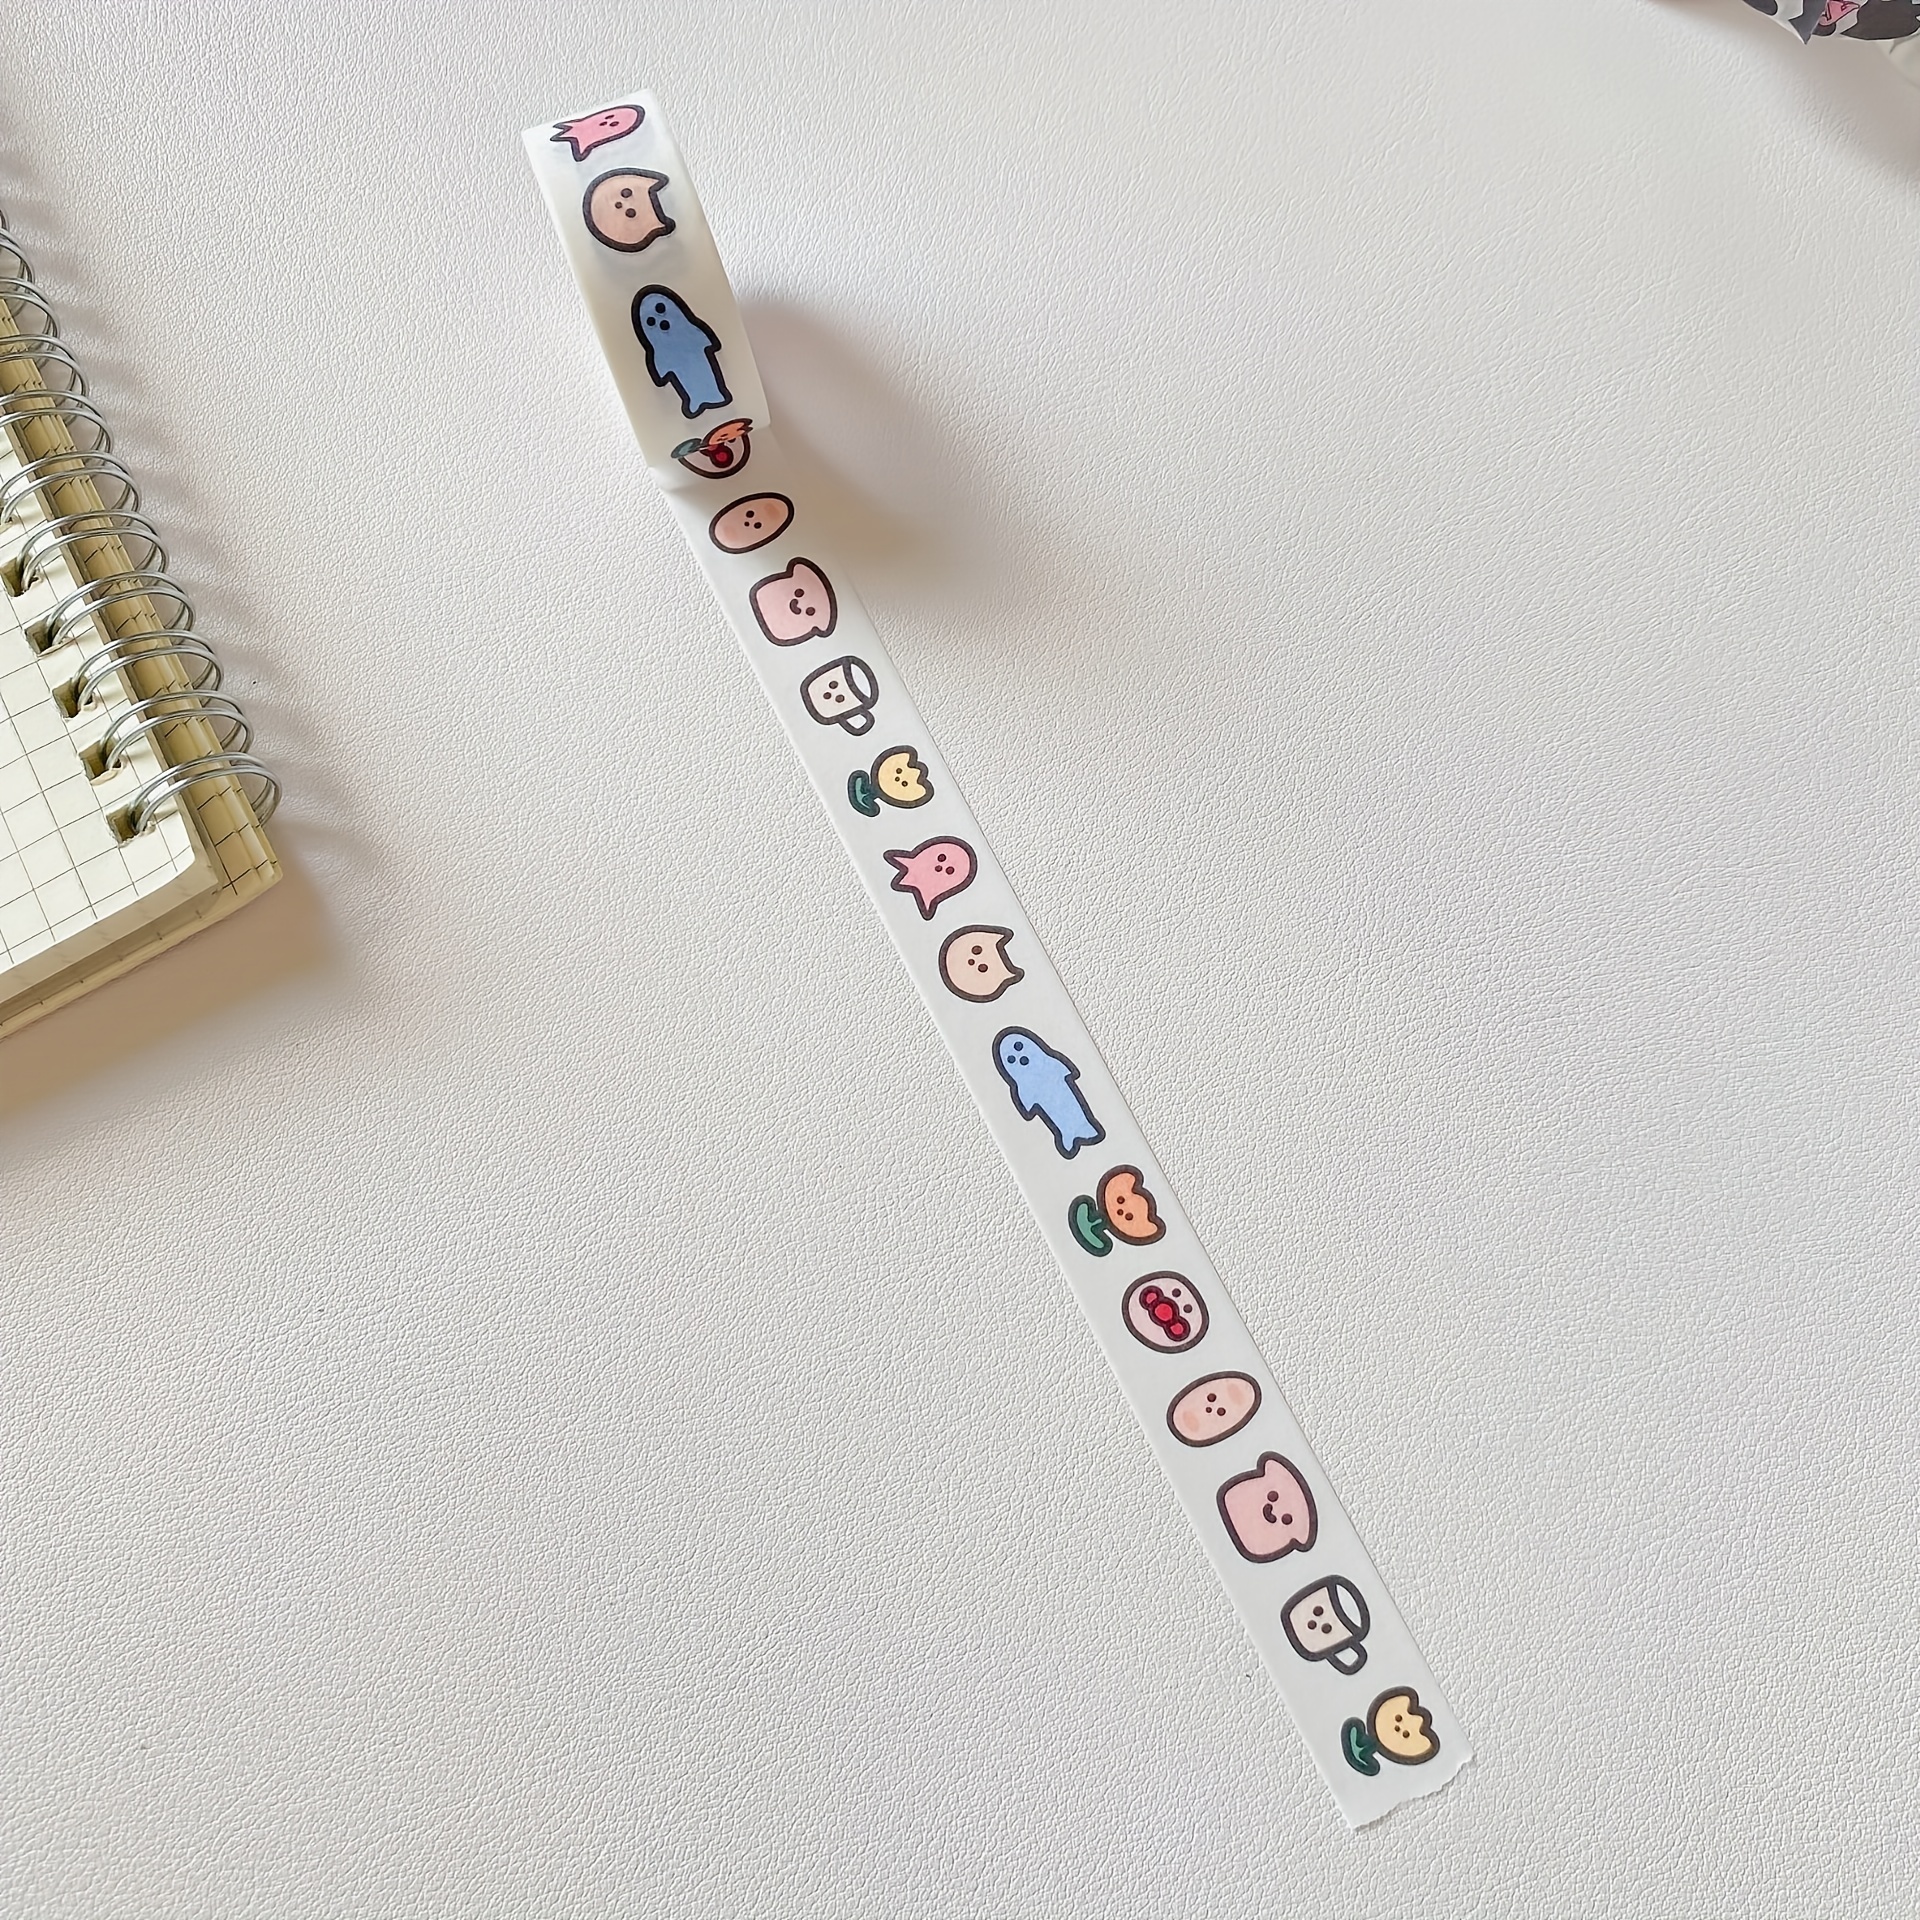 Pretty Digital Washi Tape Stickers – HardPeach